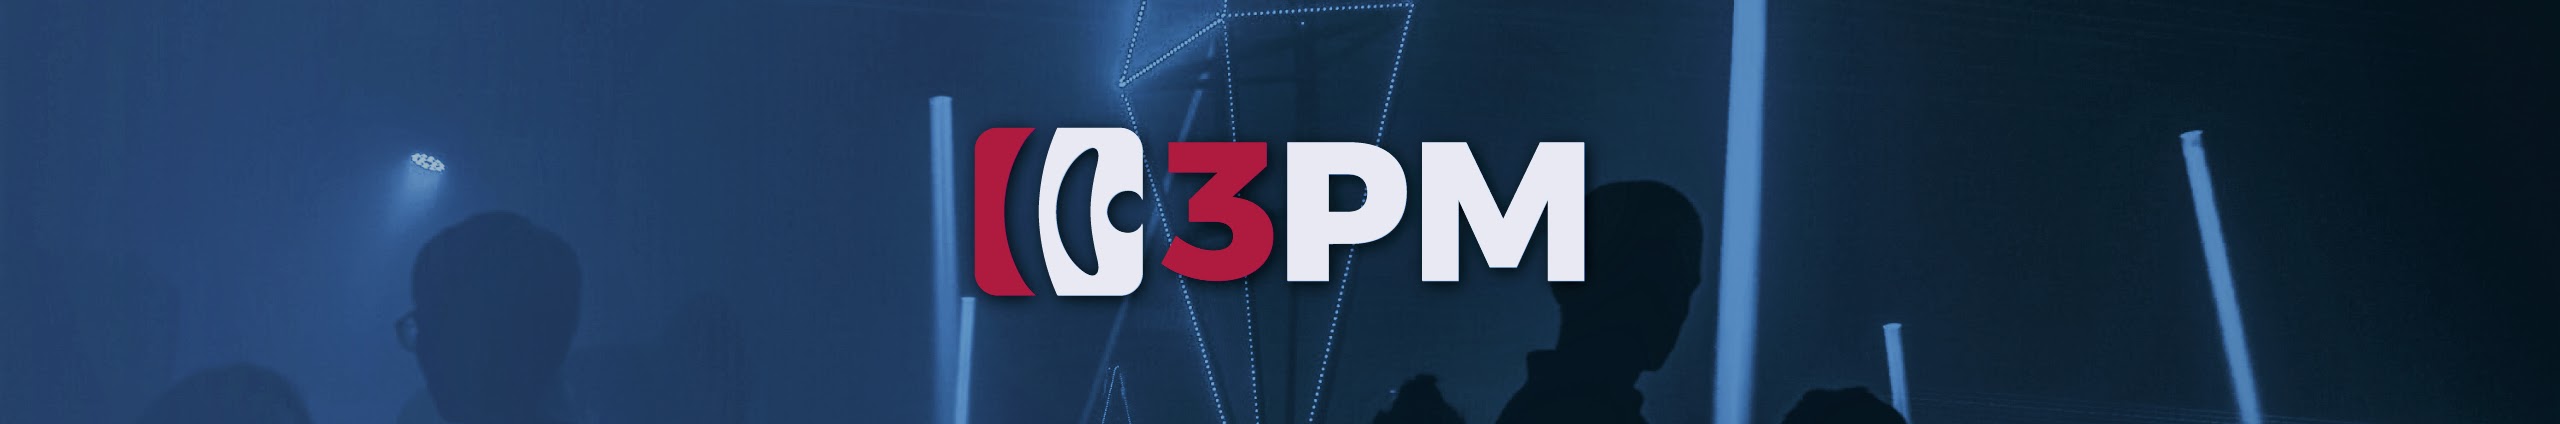 3PM - On BiH Link Video